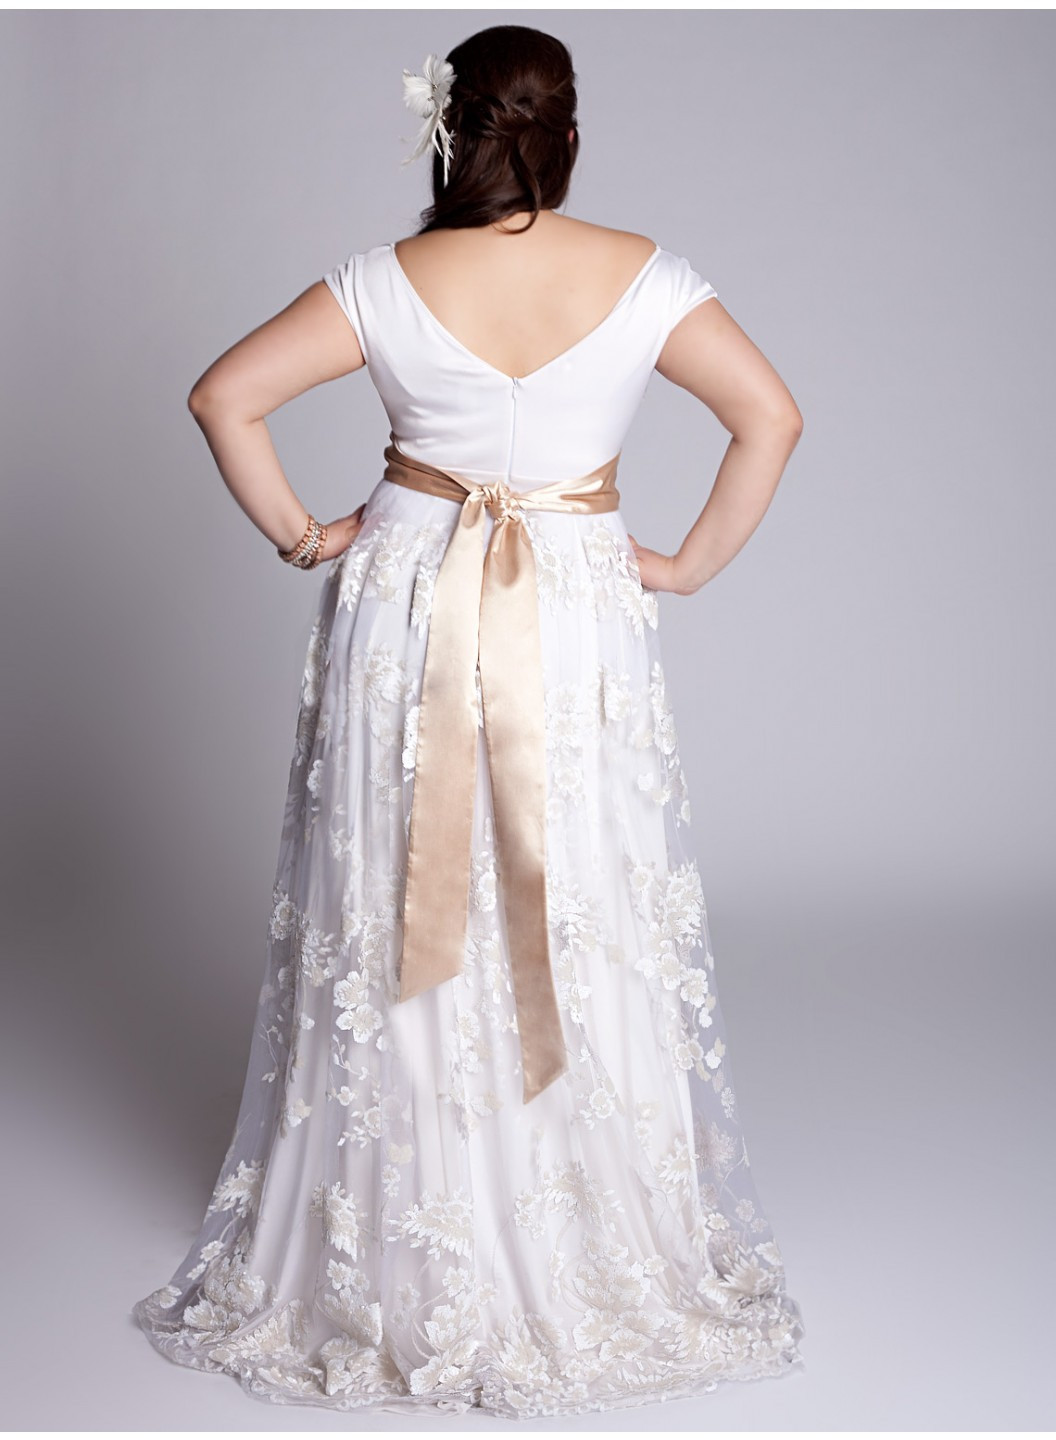 Plus Size Vintage Wedding Gowns
 20 Modern Plus Size Wedding Dresses MagMent